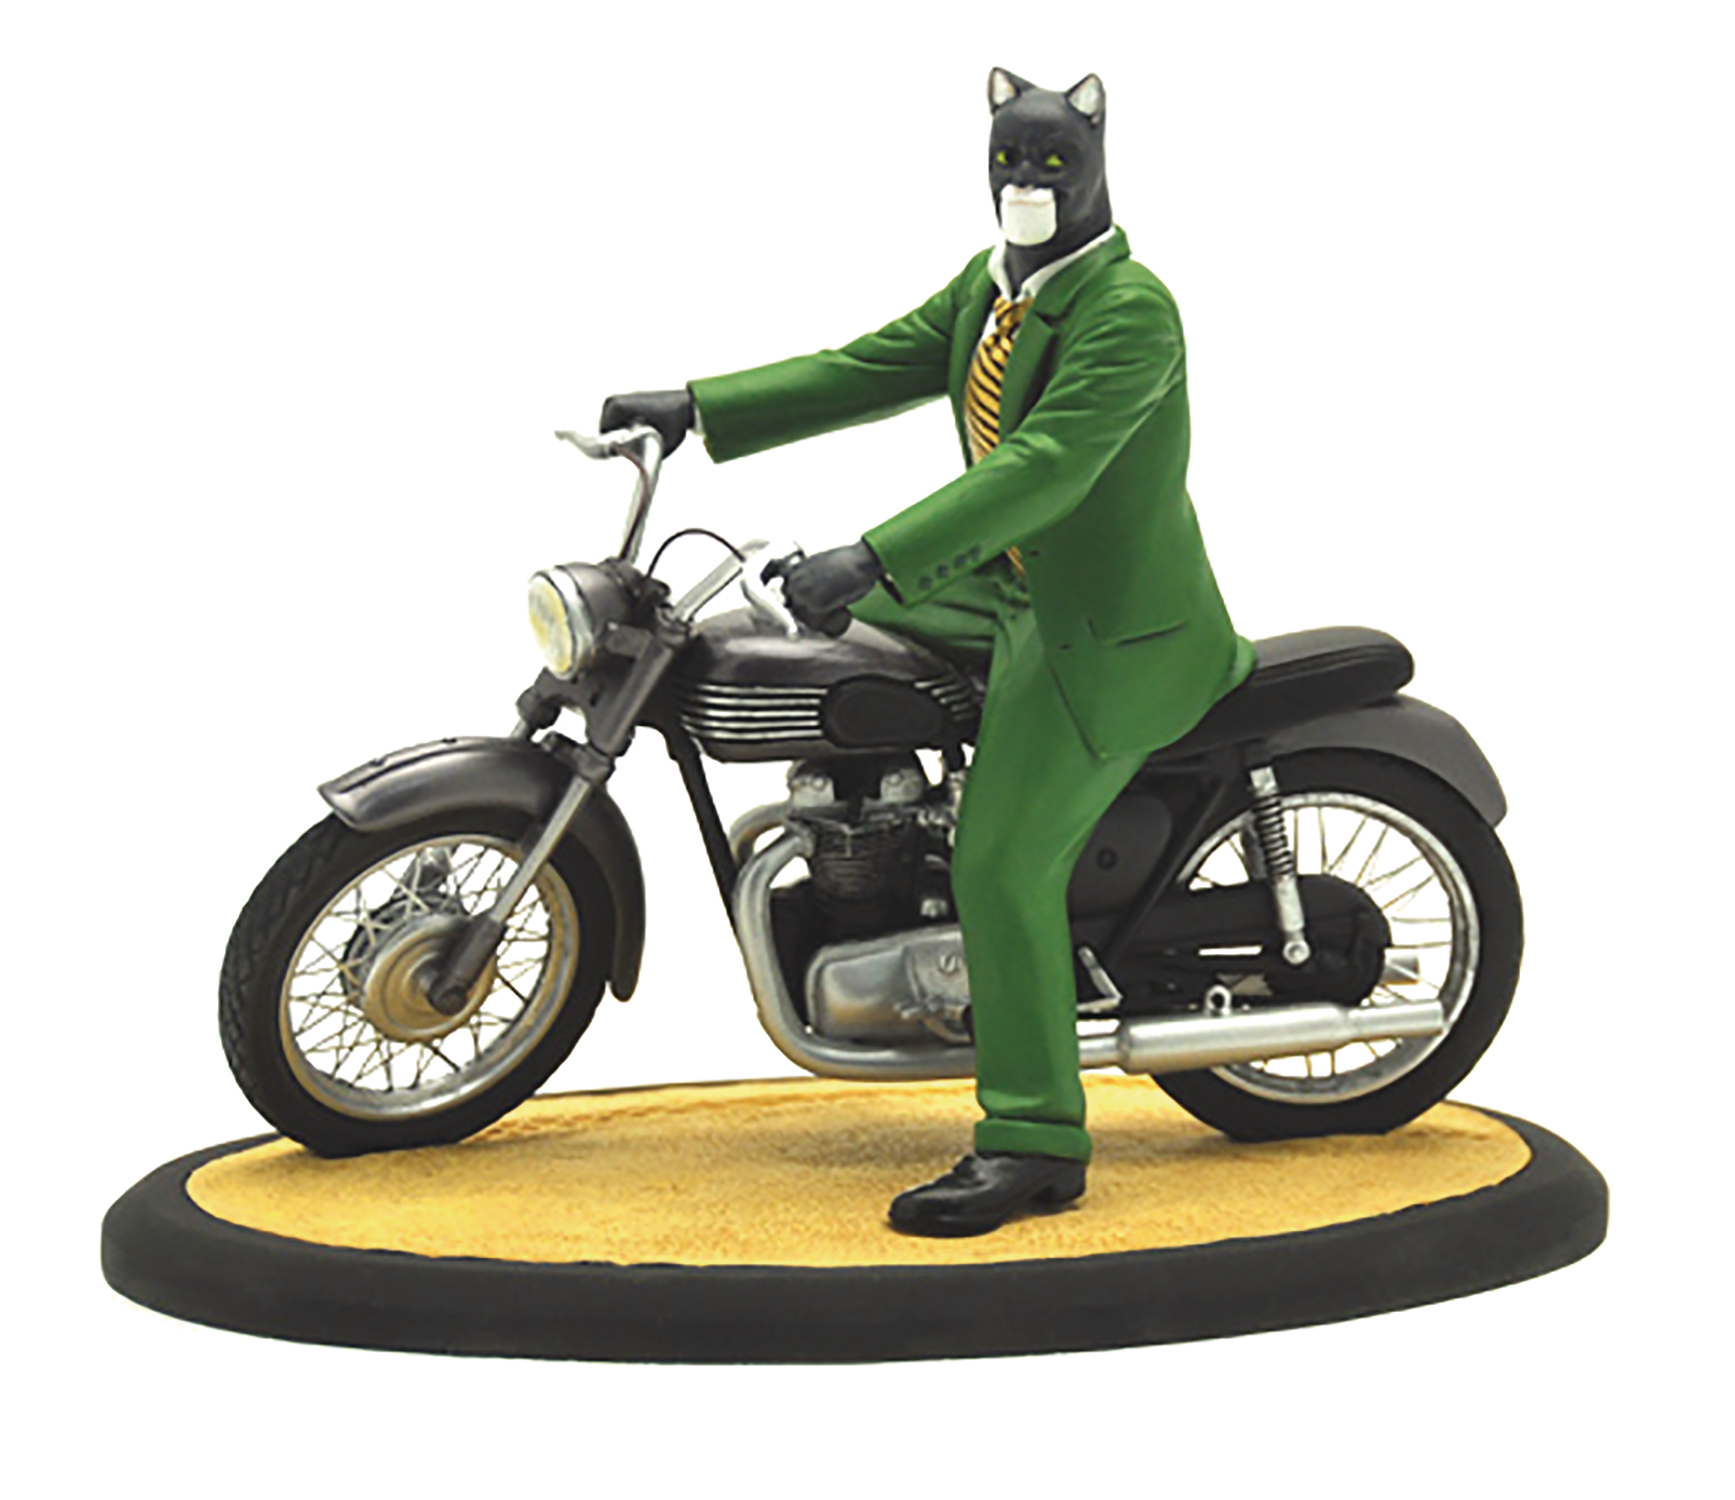 Statue of Blacksad on a Motorcycle